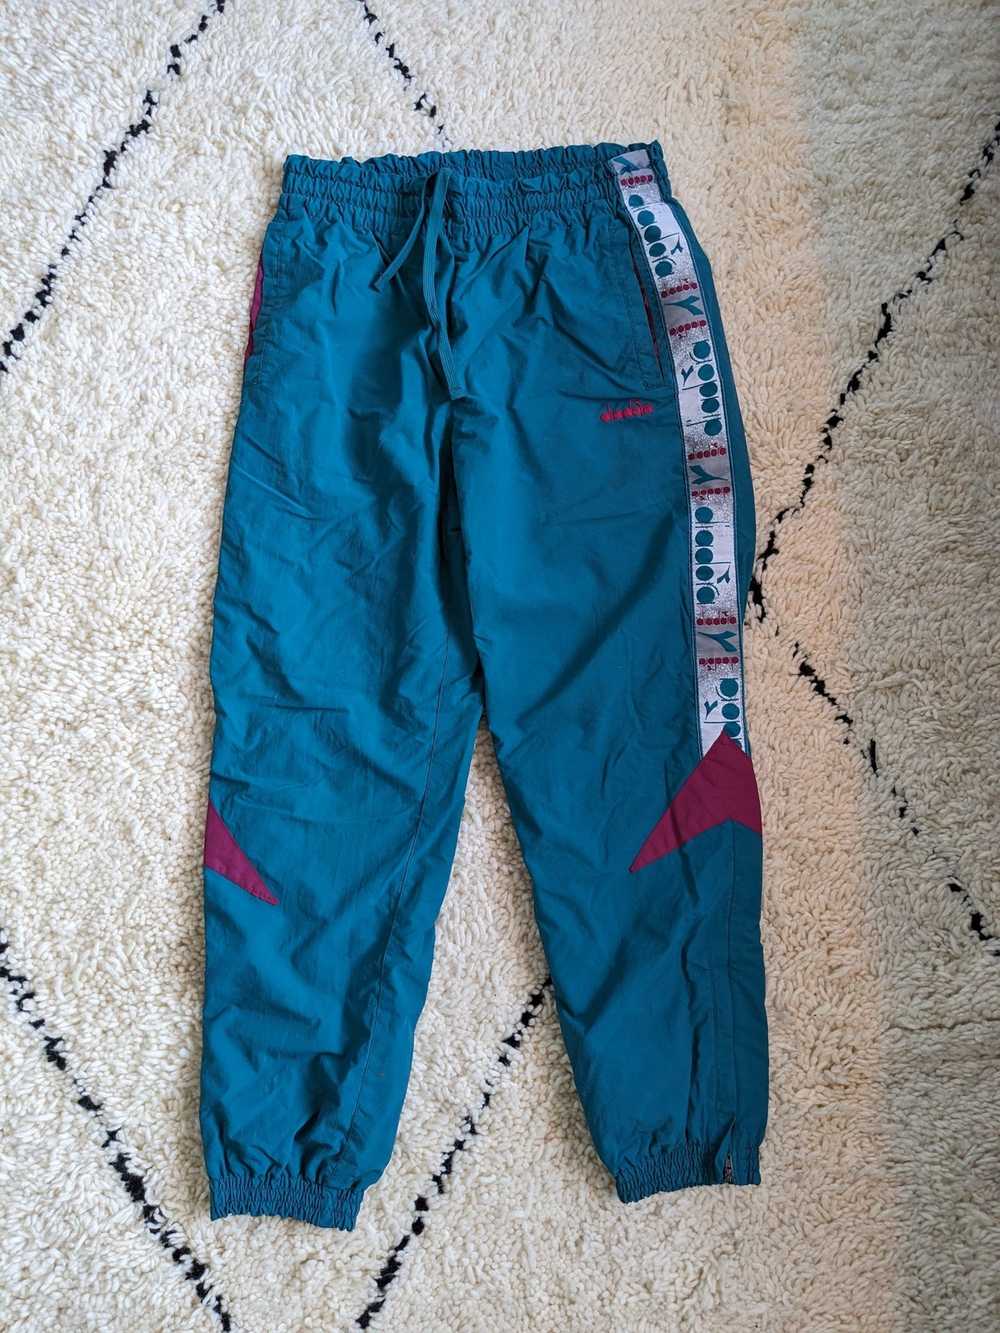 Nike Track Pants Lightweight Sweatpants- Men's XL 1990s 2000s Vintage